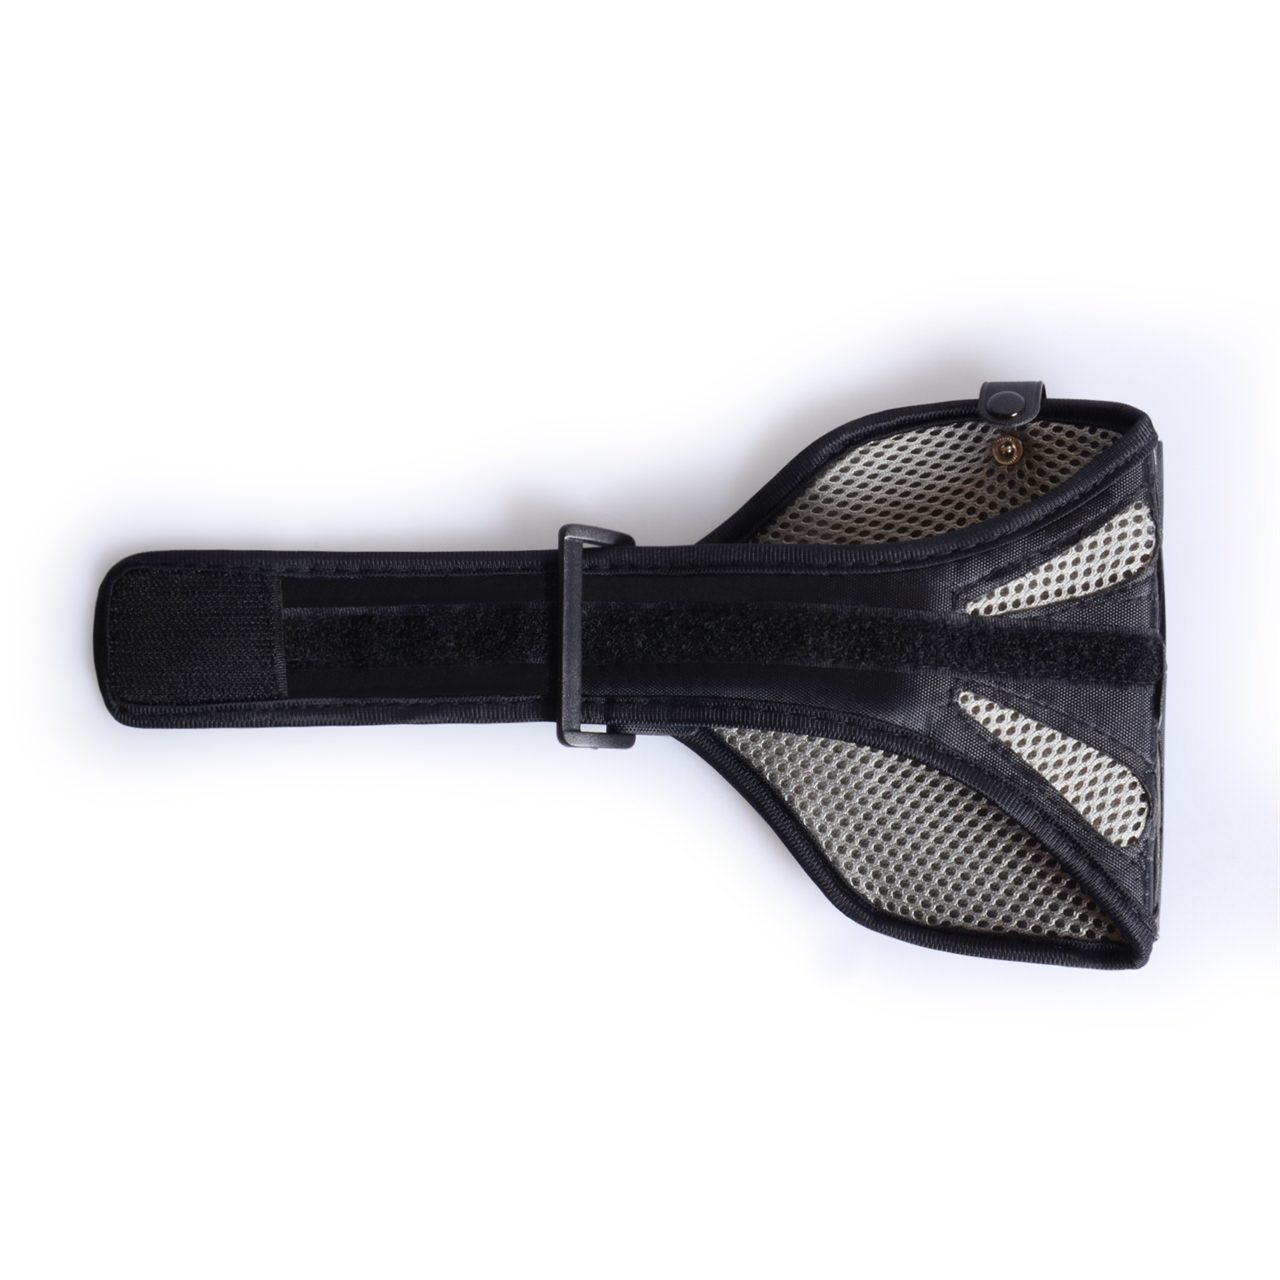 YouSave Accessories Medium Sports Armband - Black/Grey